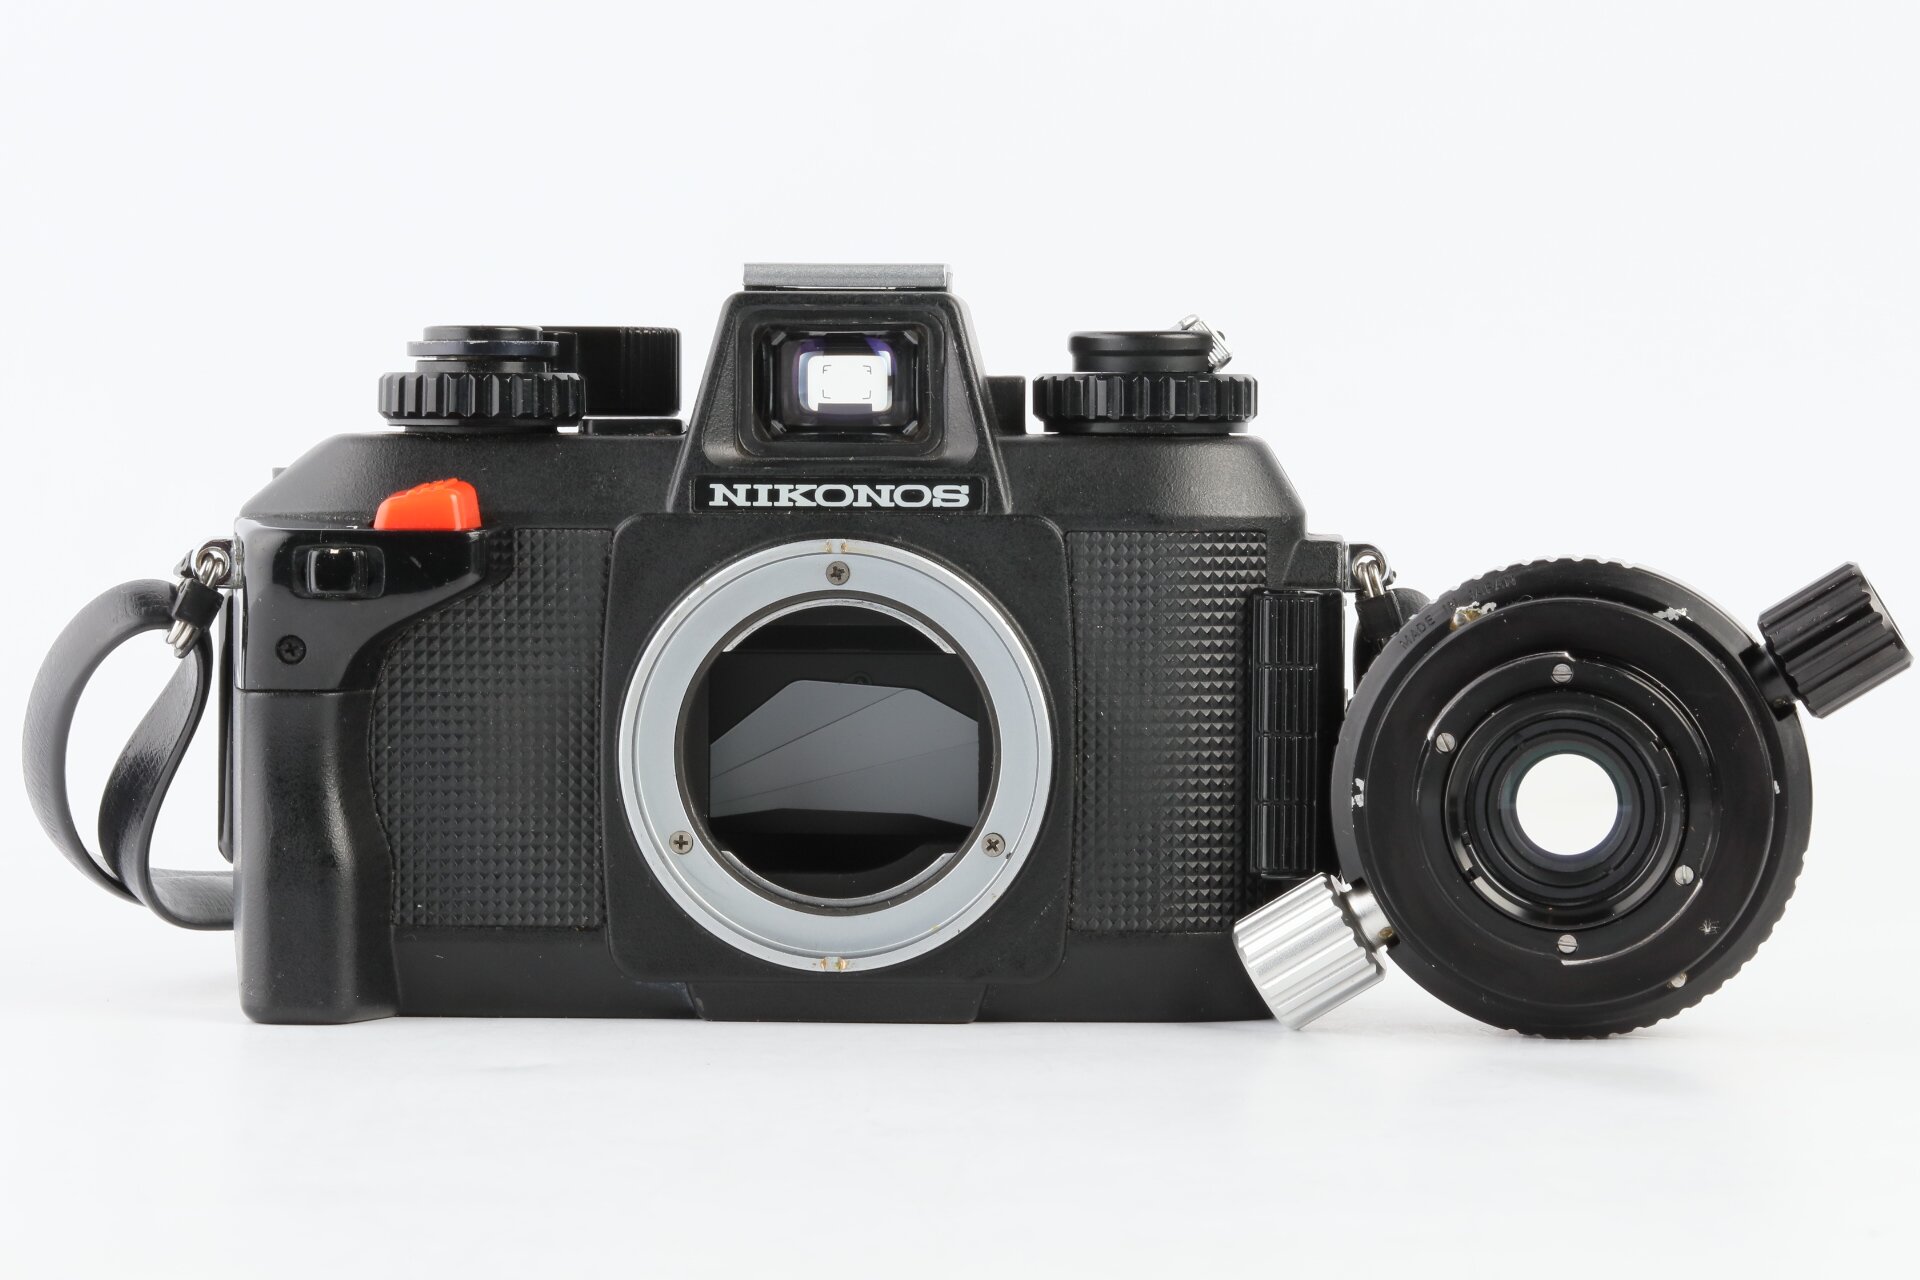 Nikonos-IV-A Gehäuse + Nikon Nikkor 2,5/35mm